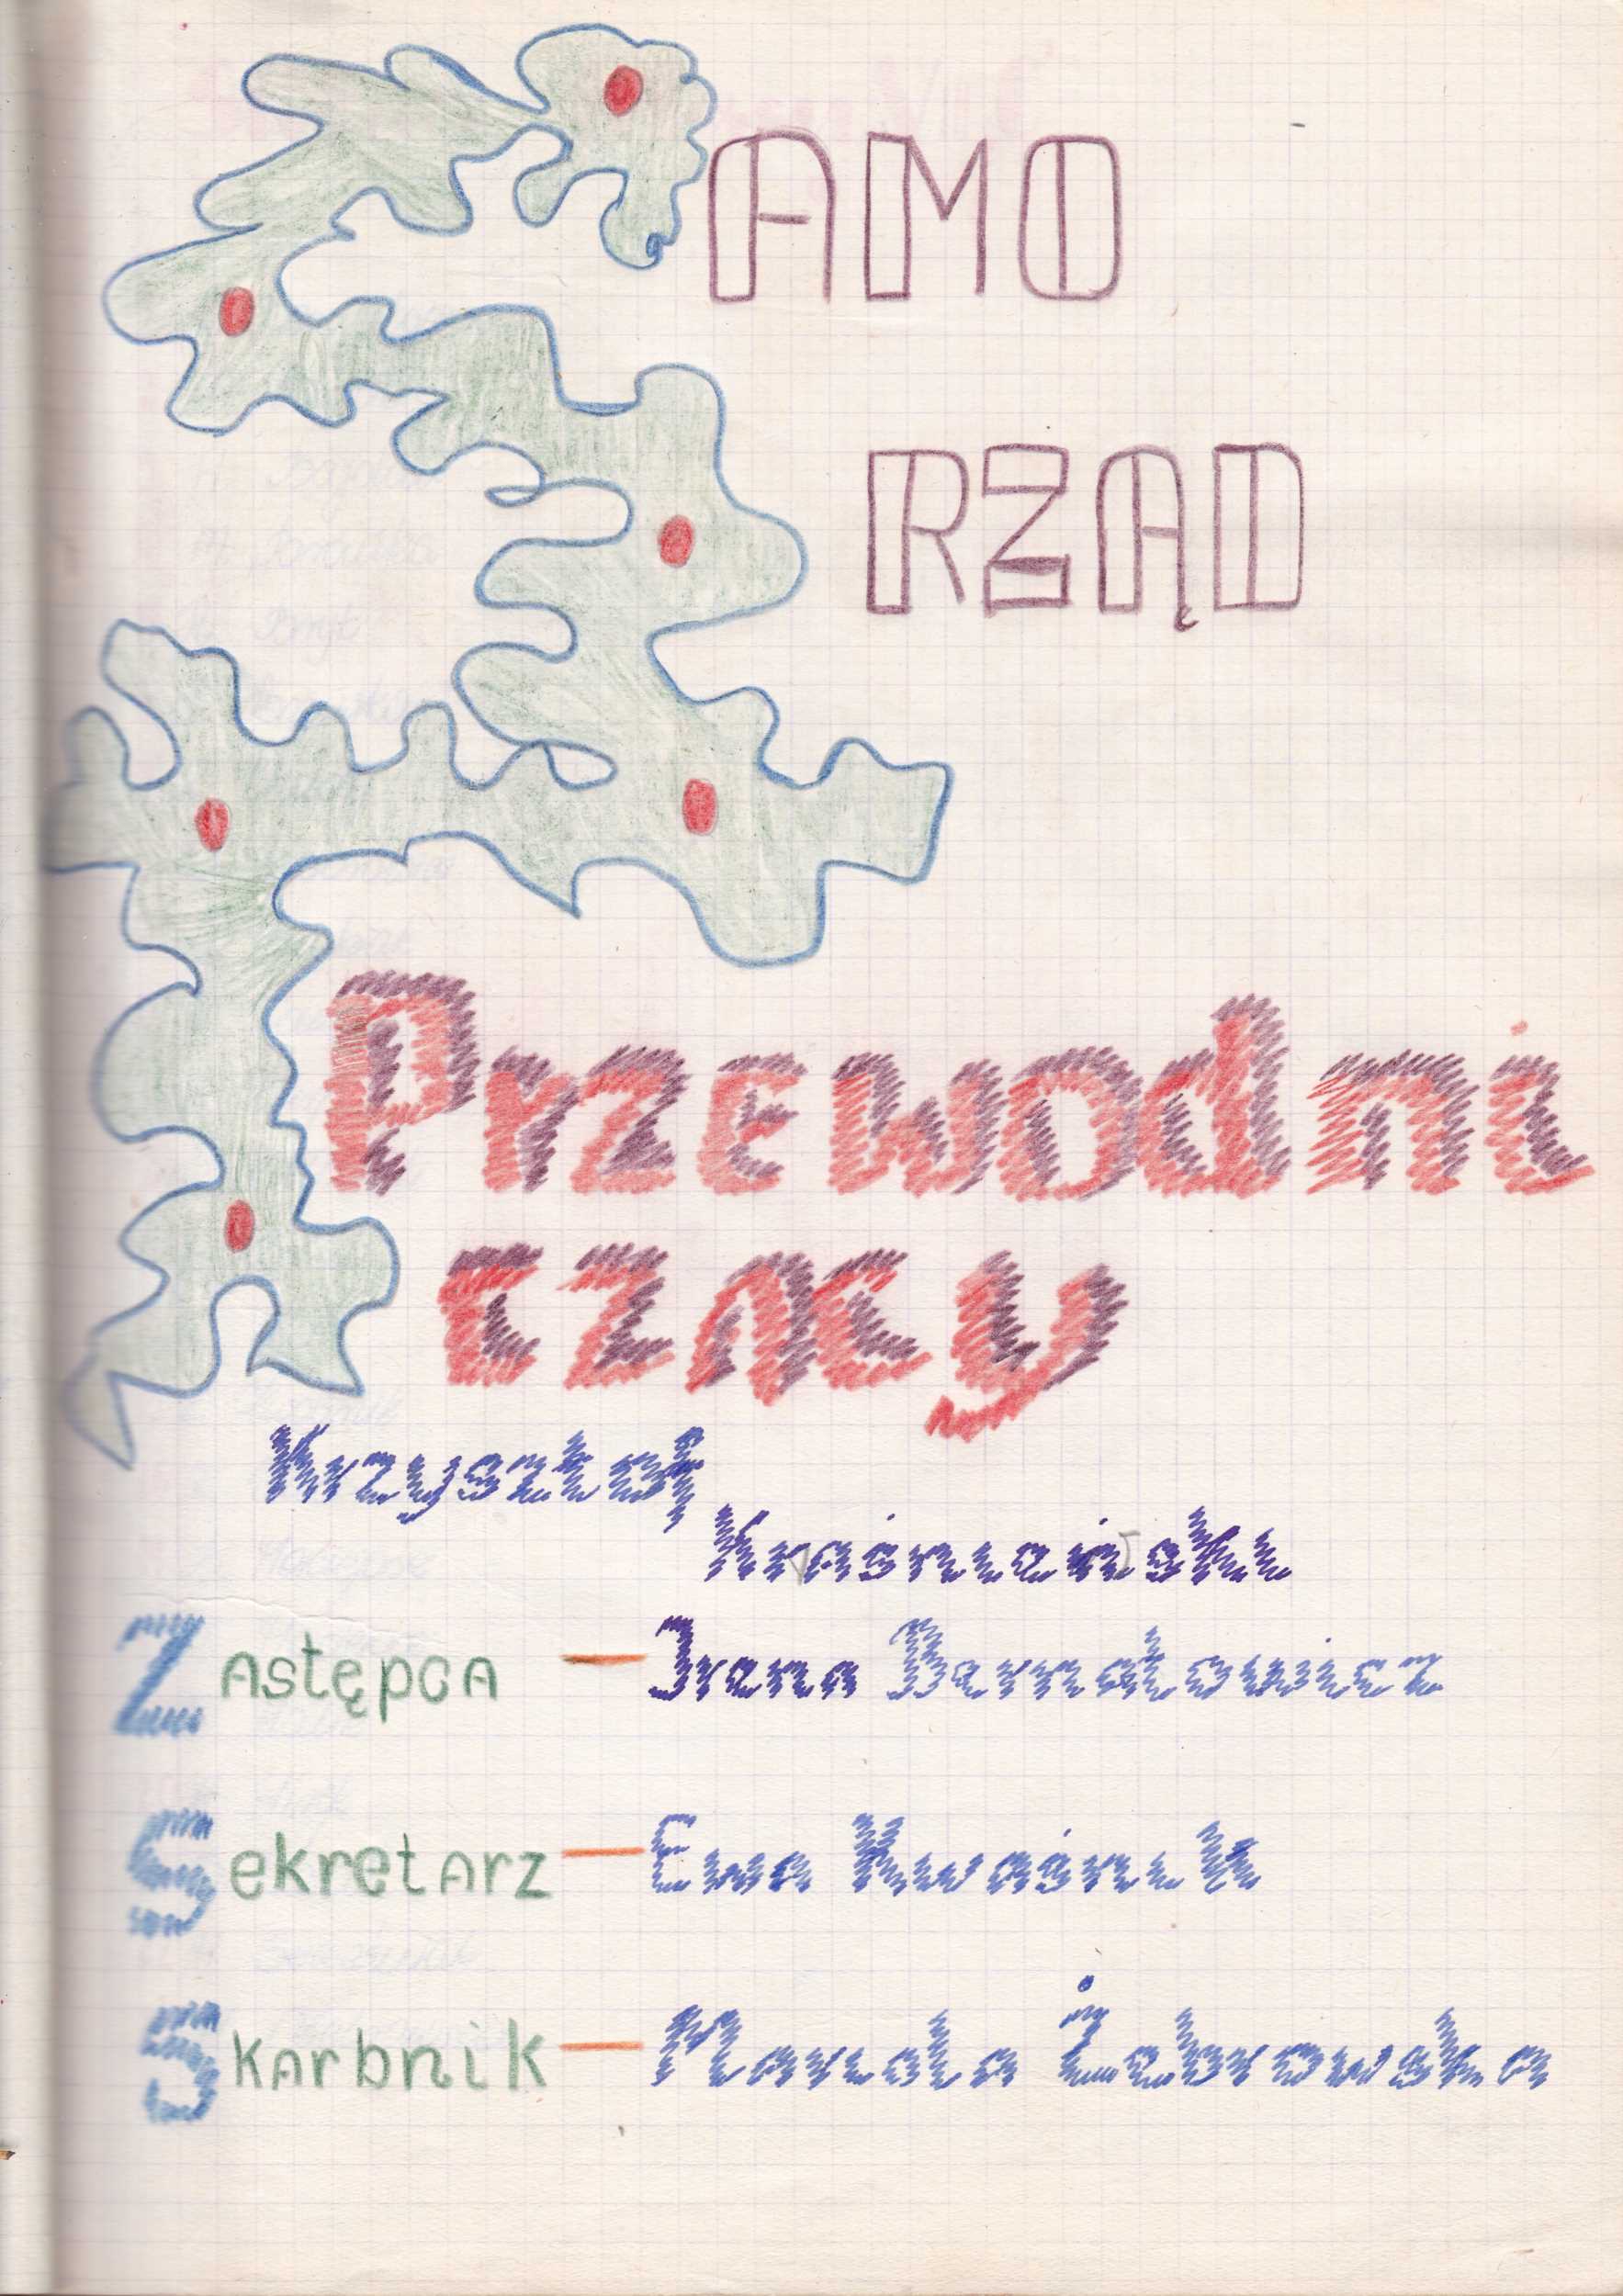 kronikaSP2 klC  1975 77 (2)